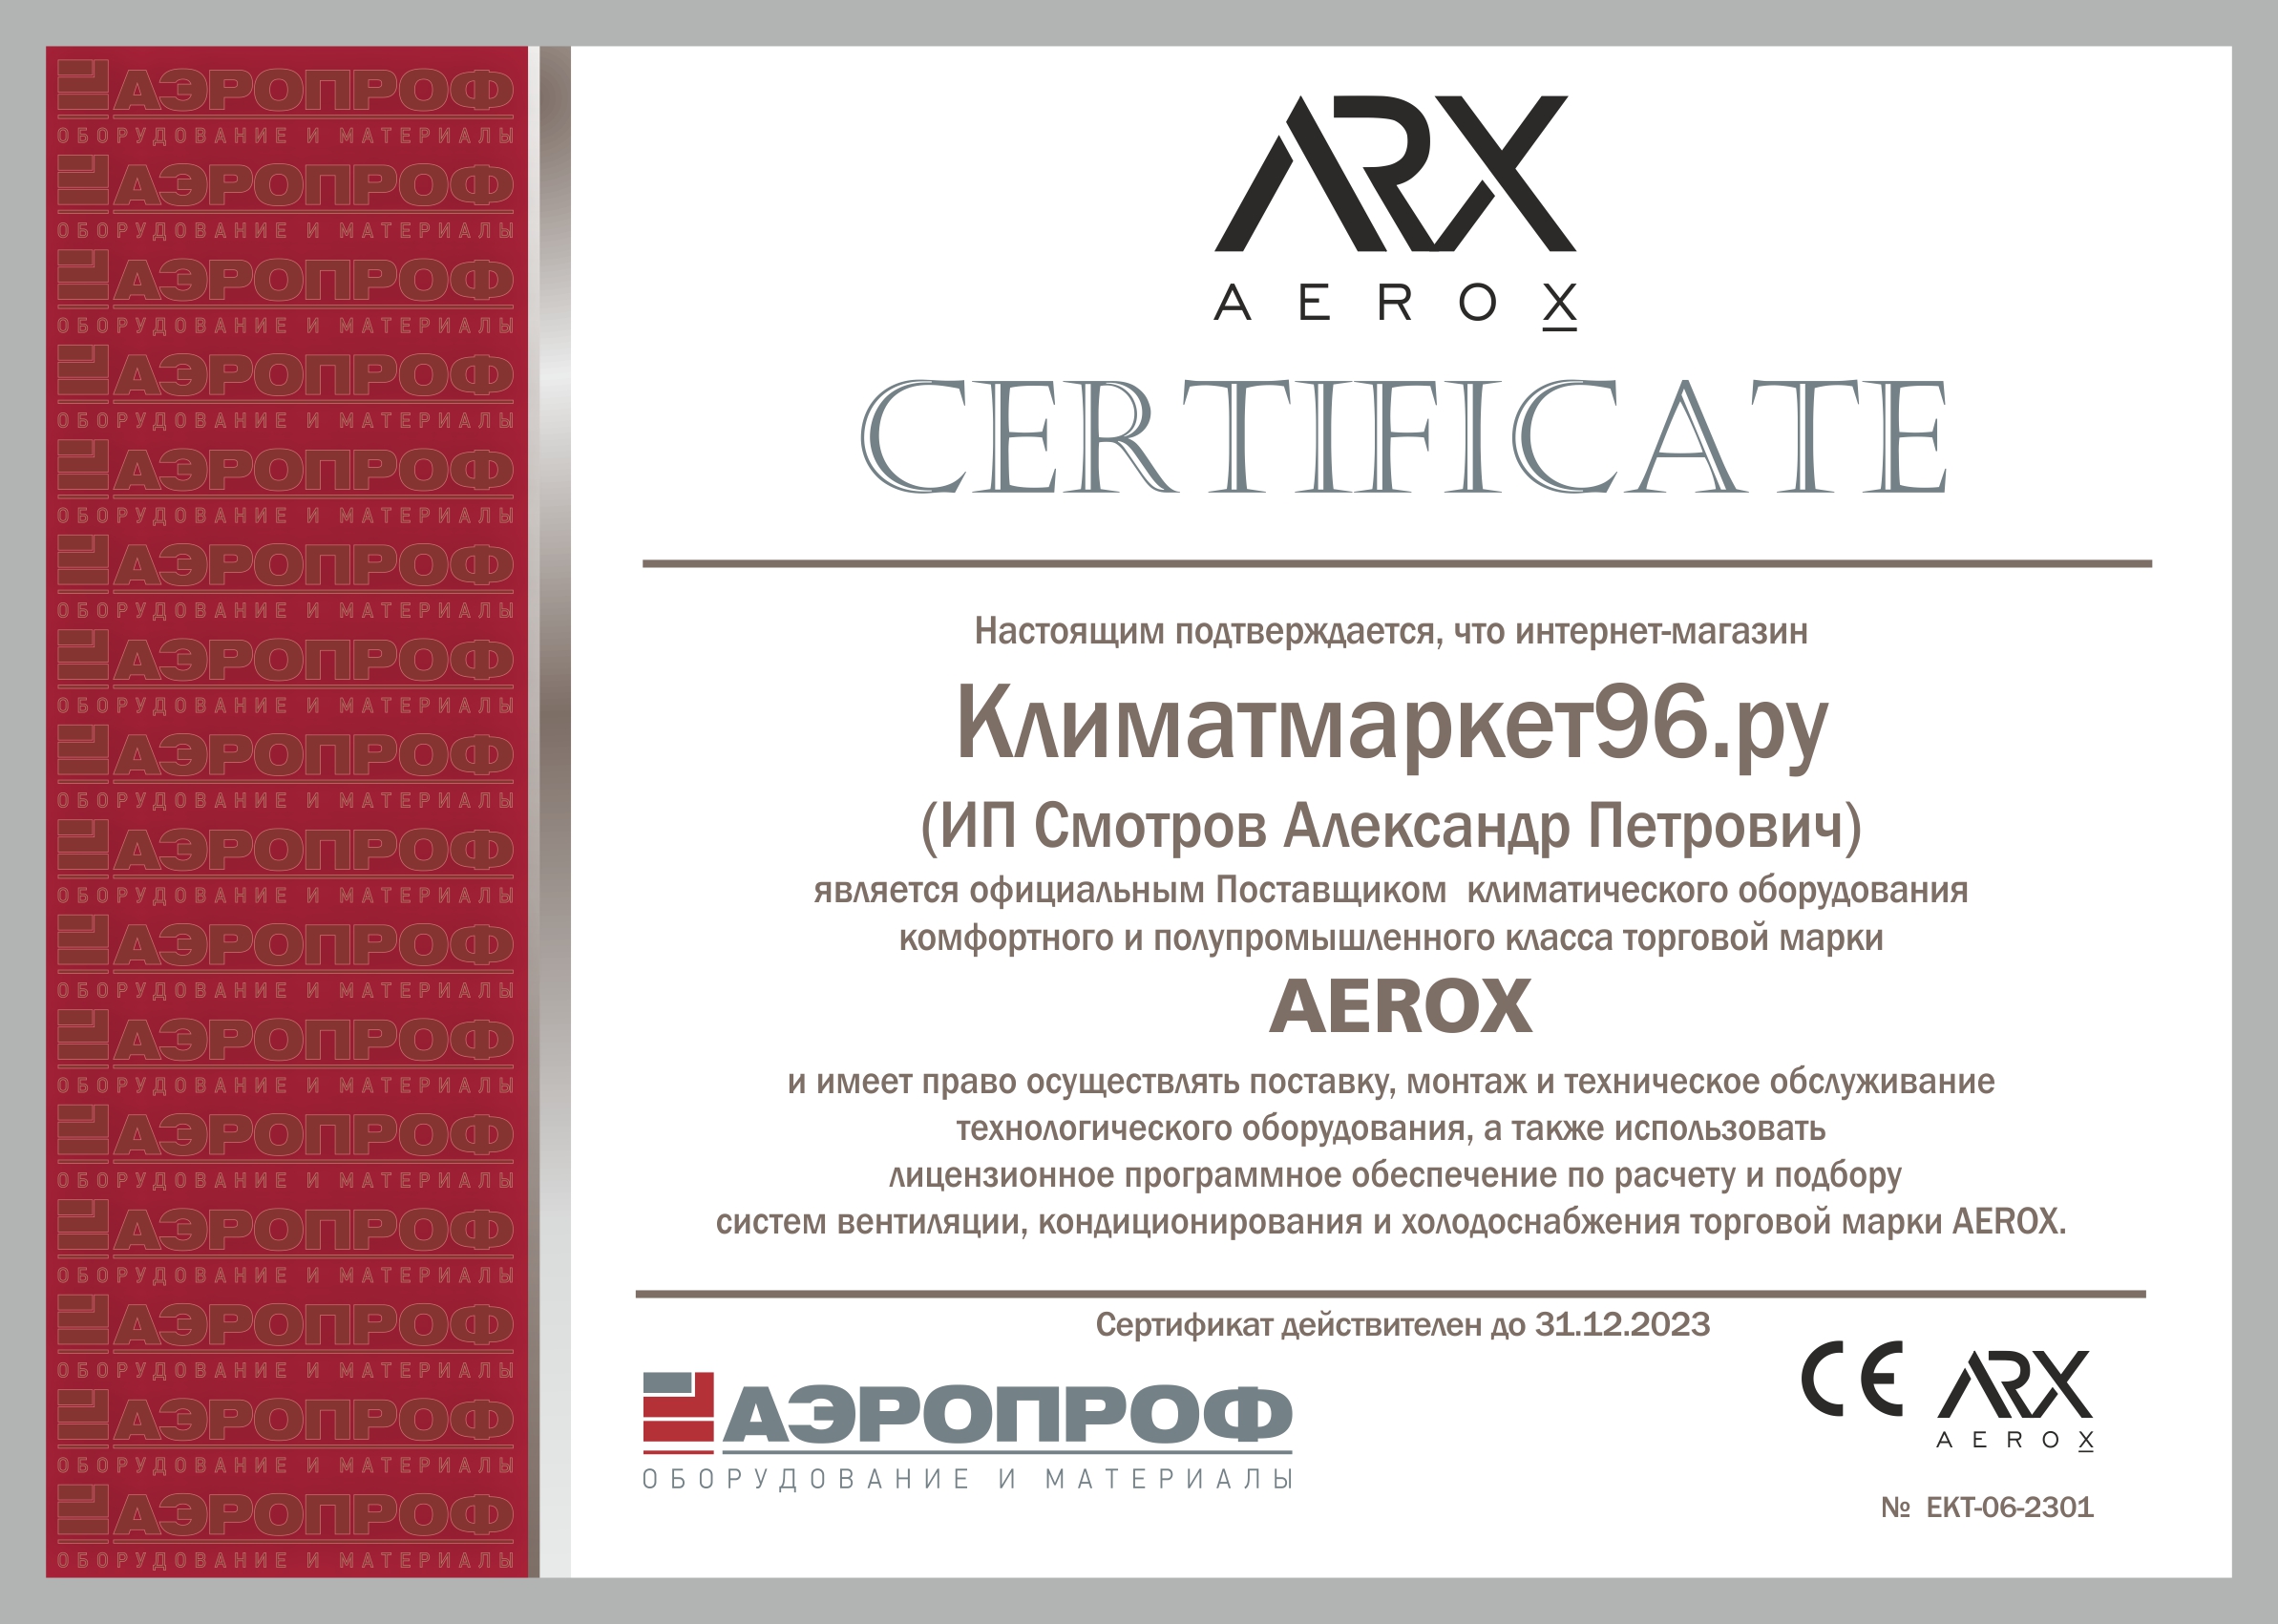 sert23-km96-arx Kondicioner Aero ALRS-II-24IHA4-01/ALRS-II-24OHA4-01 kypit v Ekaterinbyrge v internet-magazine KlimatMarket96.ry Сертификат официального дилера